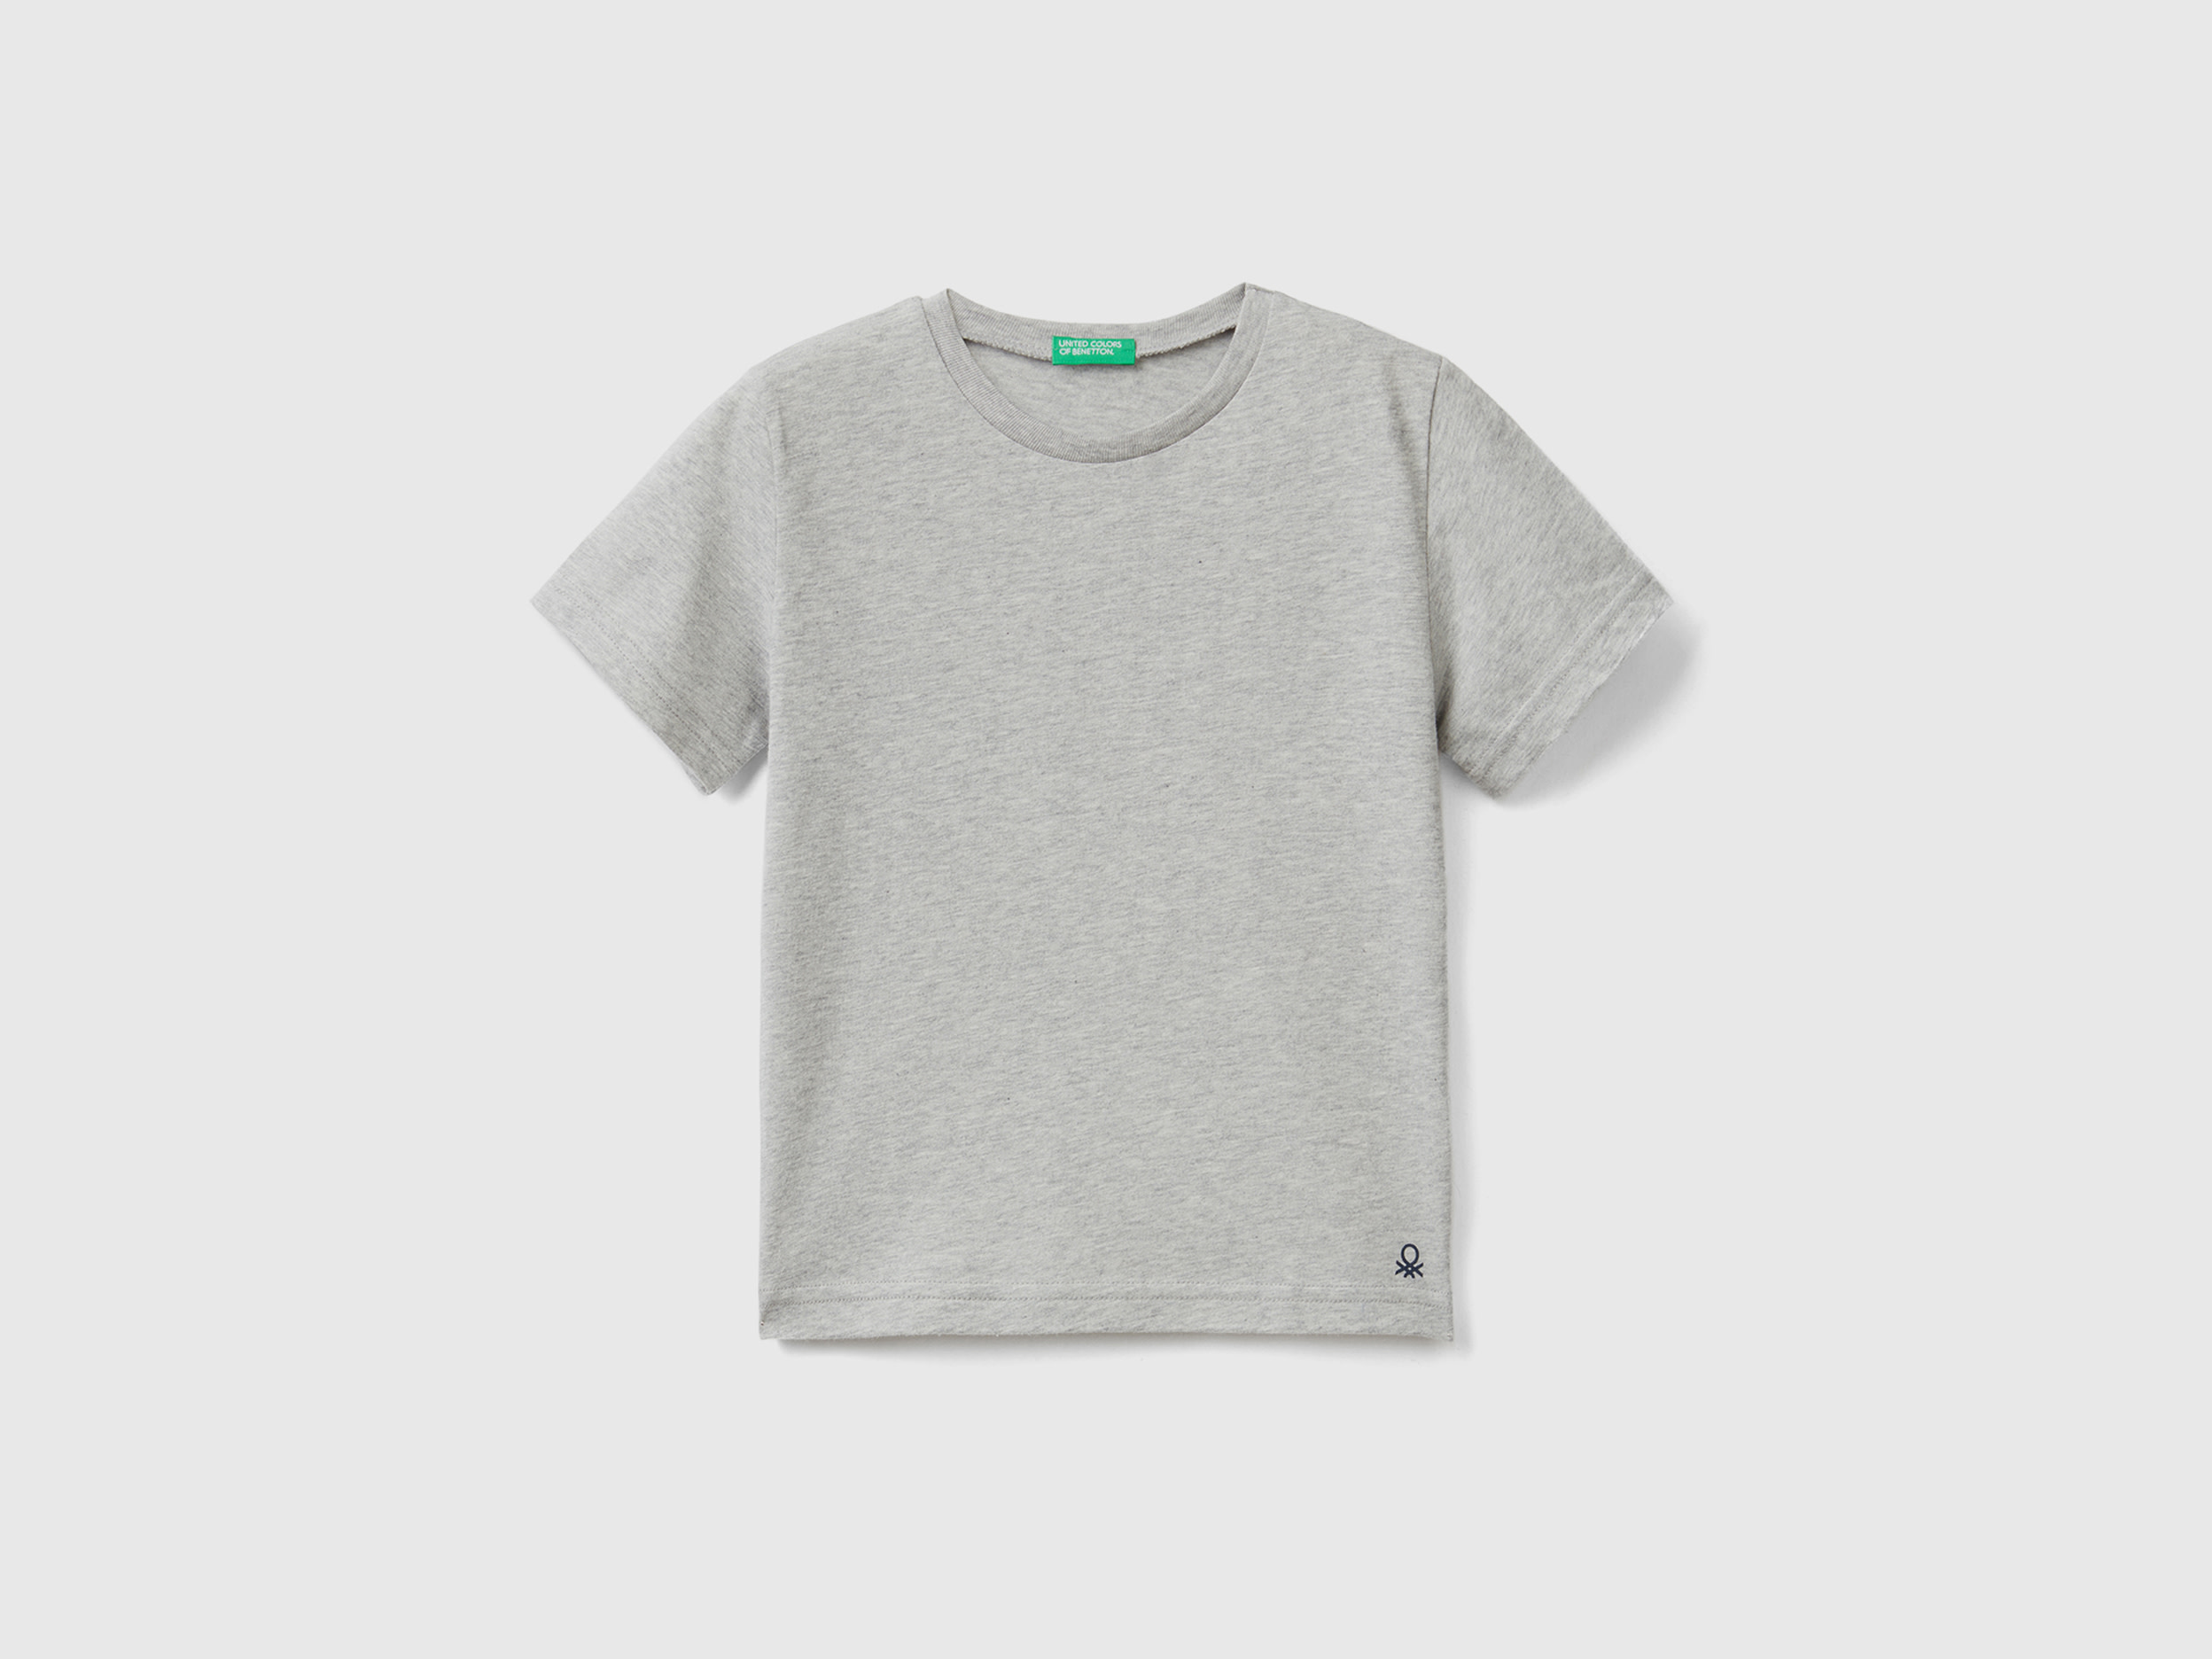 Image of Benetton, T-shirt In Organic Cotton, size 82, Light Gray, Kids